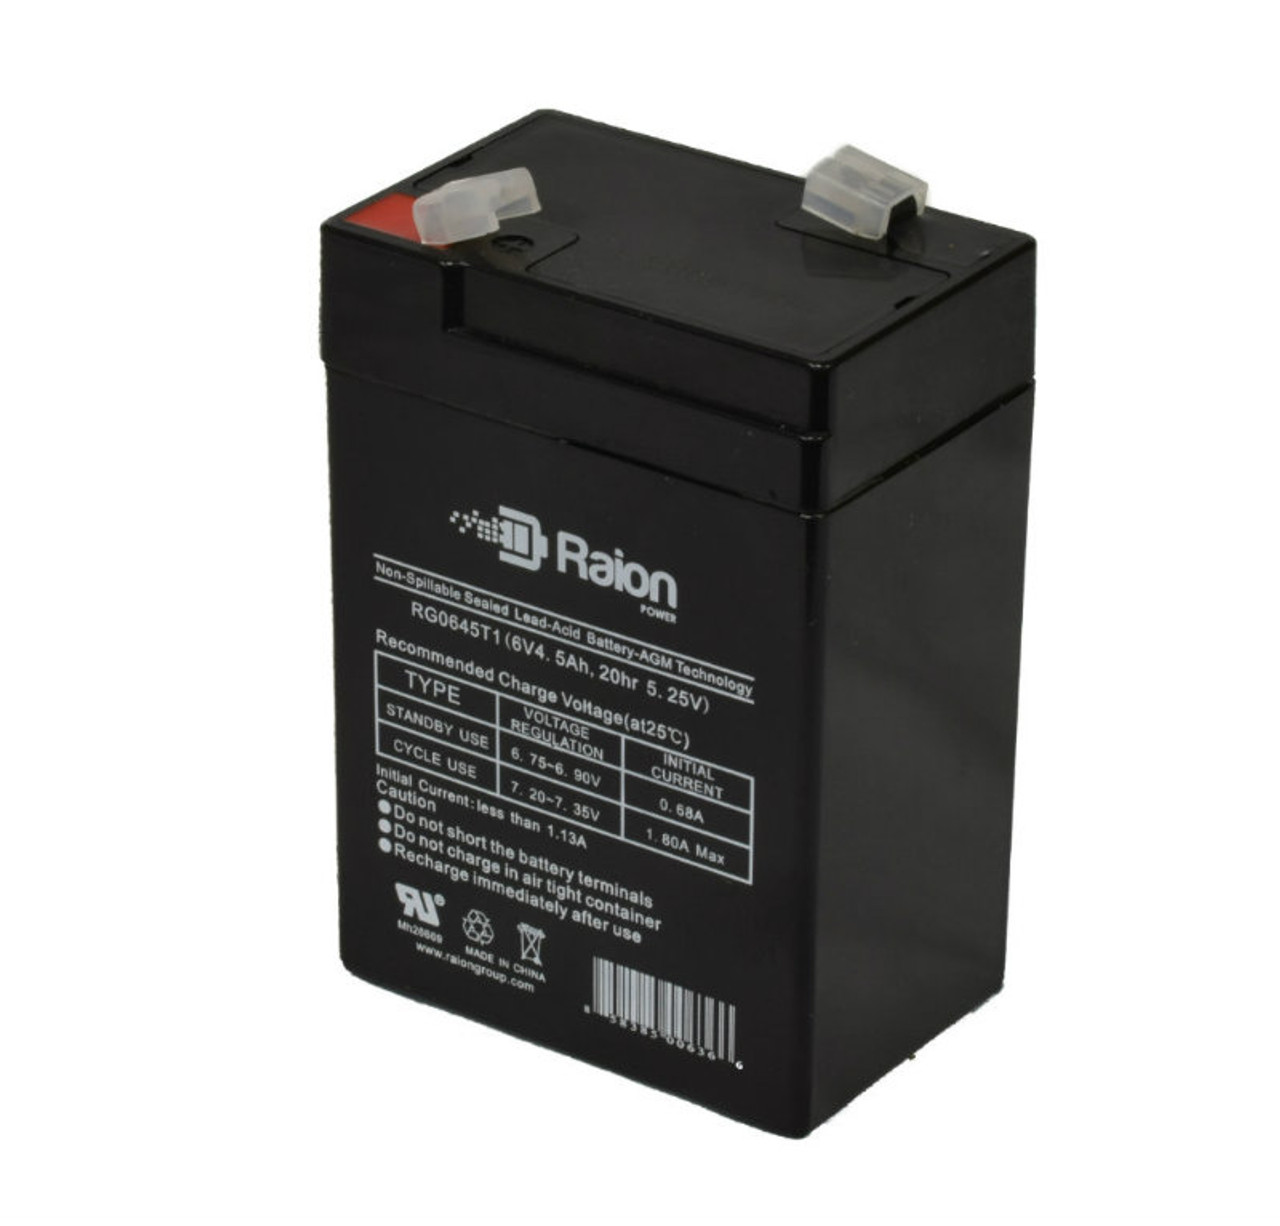 Raion Power RG0645T1 6V 4.5Ah Replacement Battery Cartridge for Sonnenschein DM1